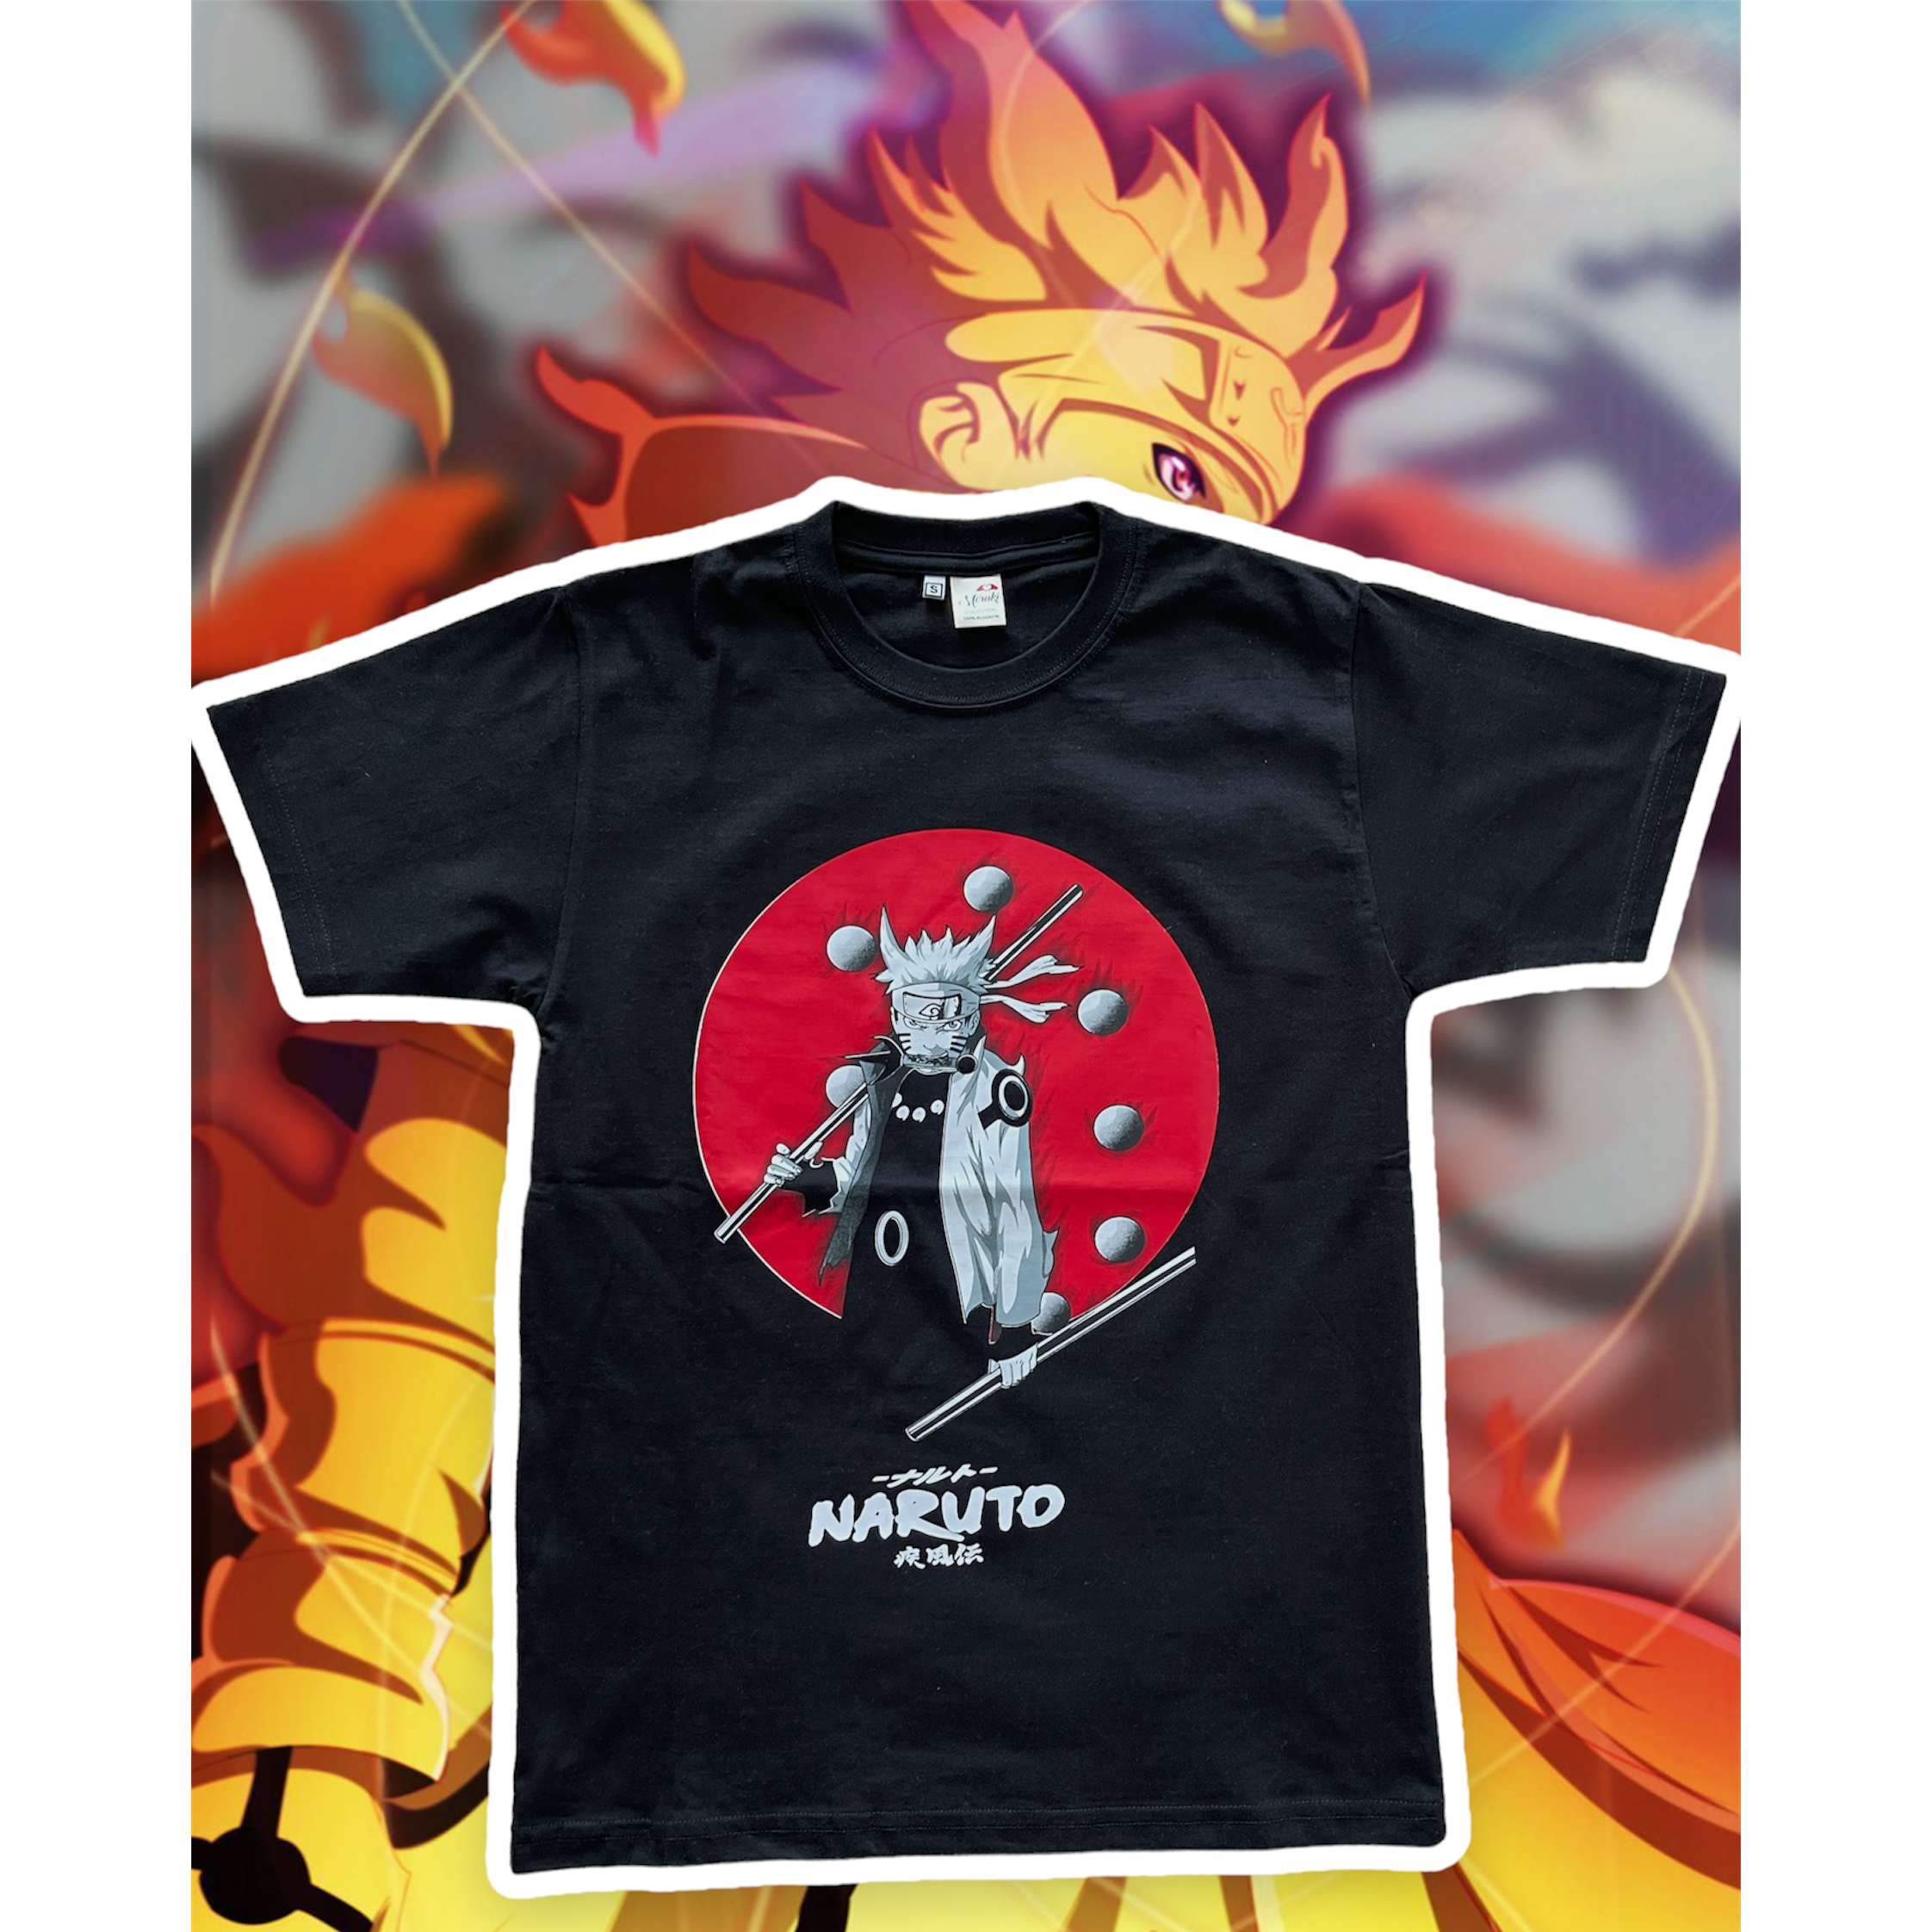 T-shirt modelo Naruto talla S